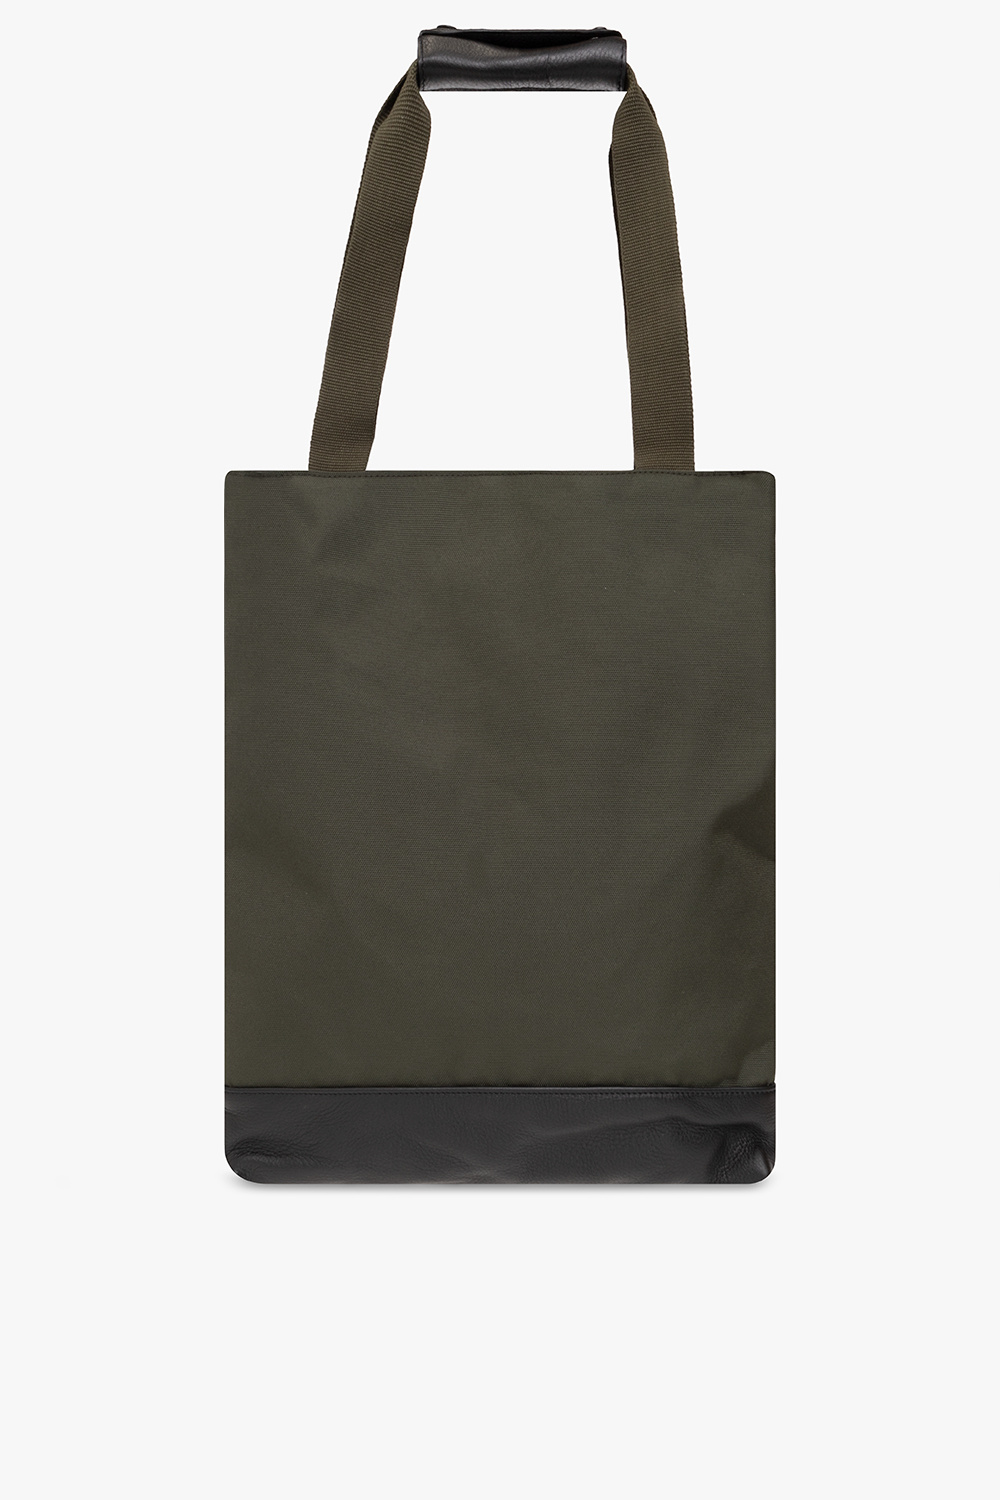 Y-3 Yohji Yamamoto Shopper bag